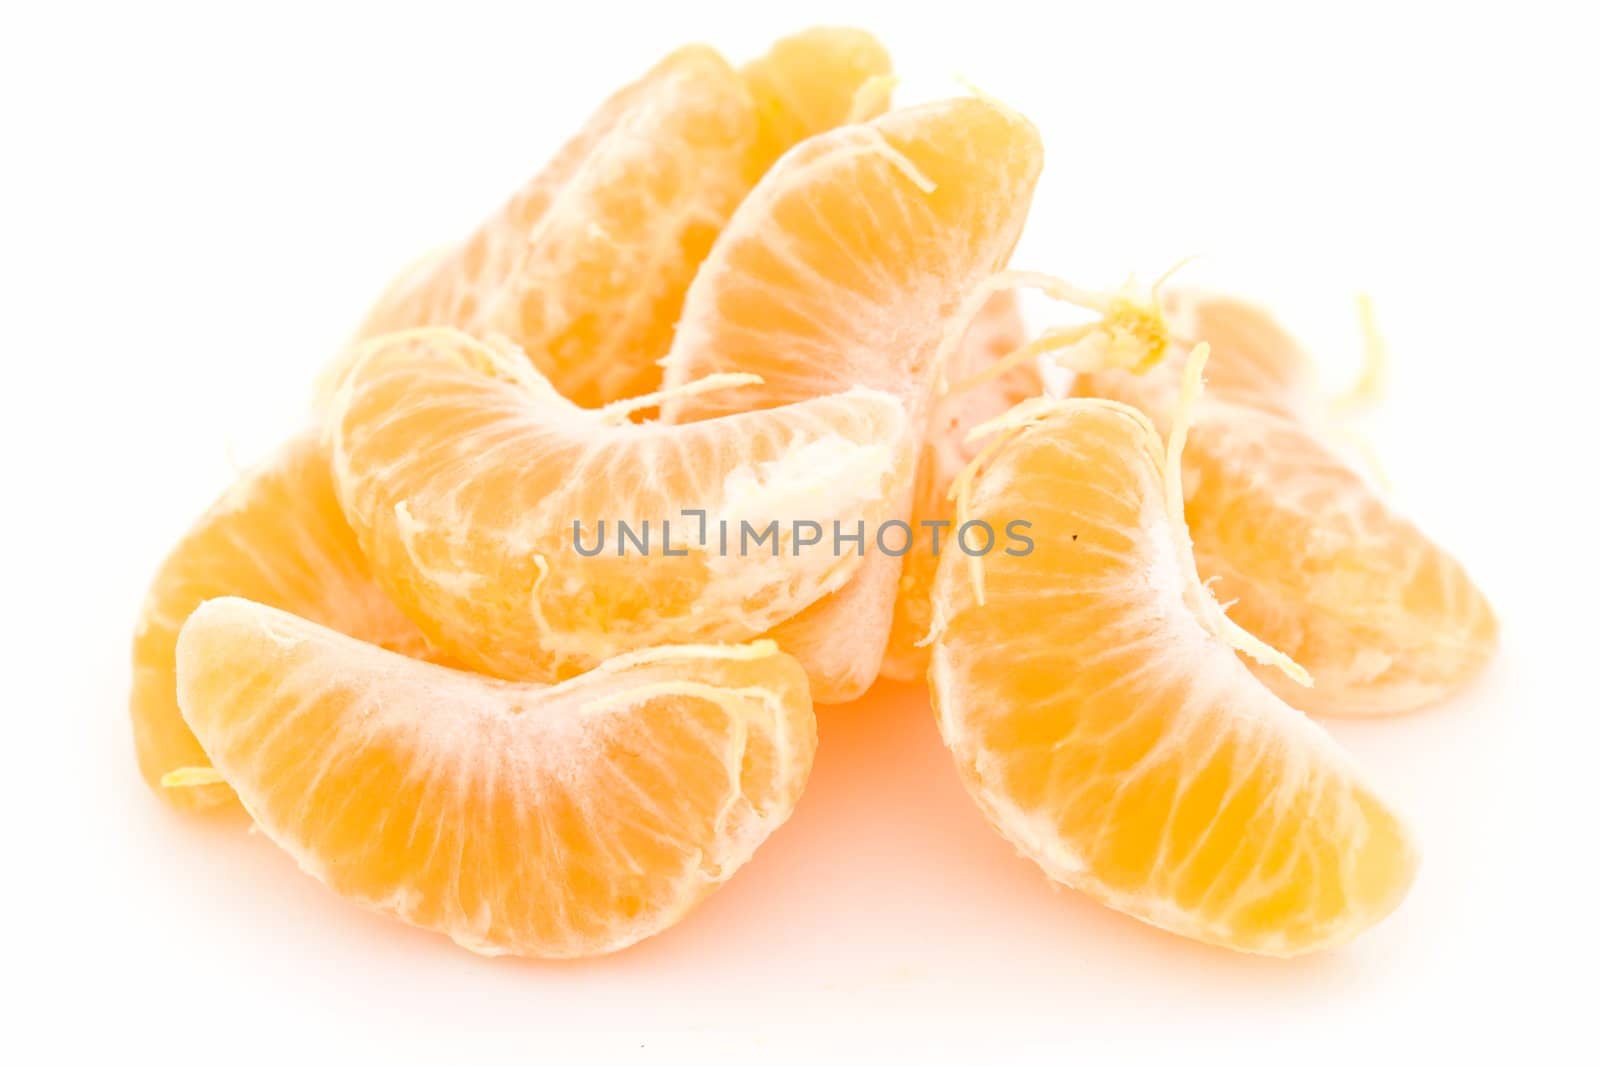 some tangerine segments on a white background